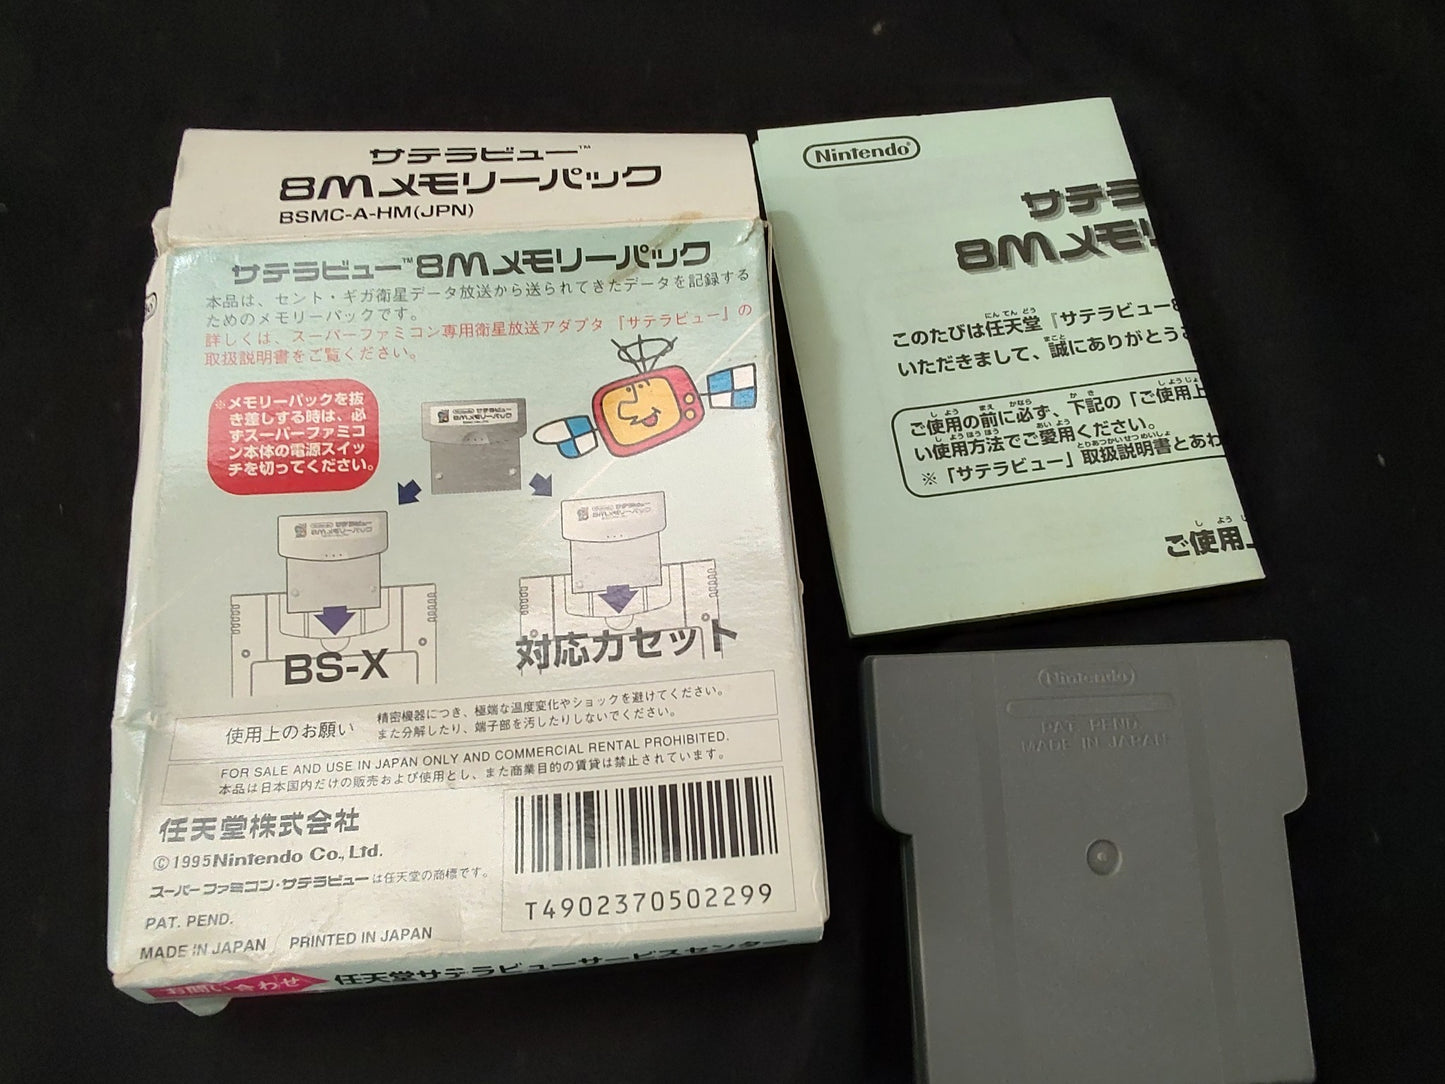 Nintendo Satellaview SHVC-029 and Accessories set Super Famicom console-f1014-